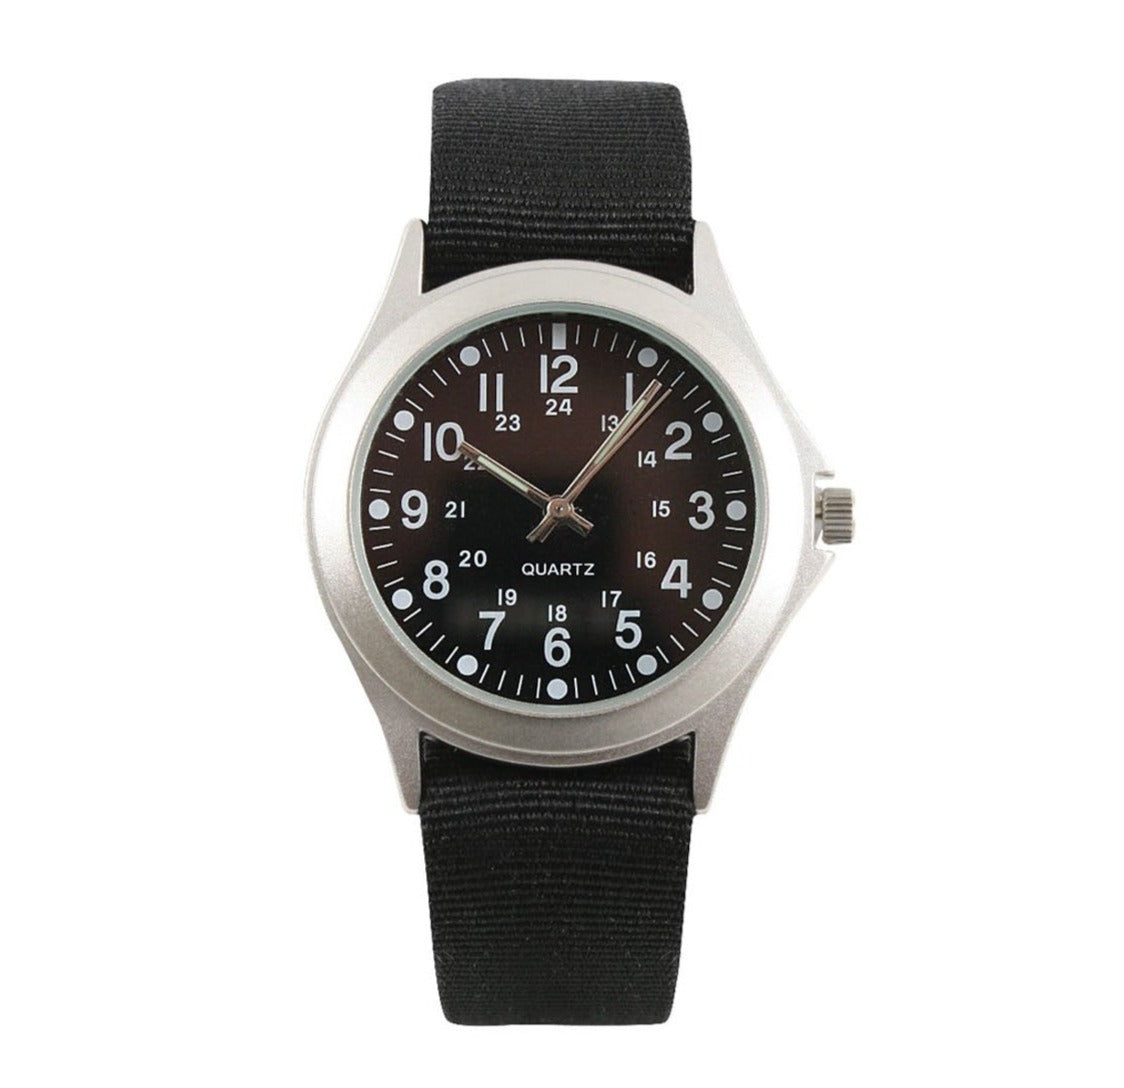 Rothco Military Style Quartz Watch Black